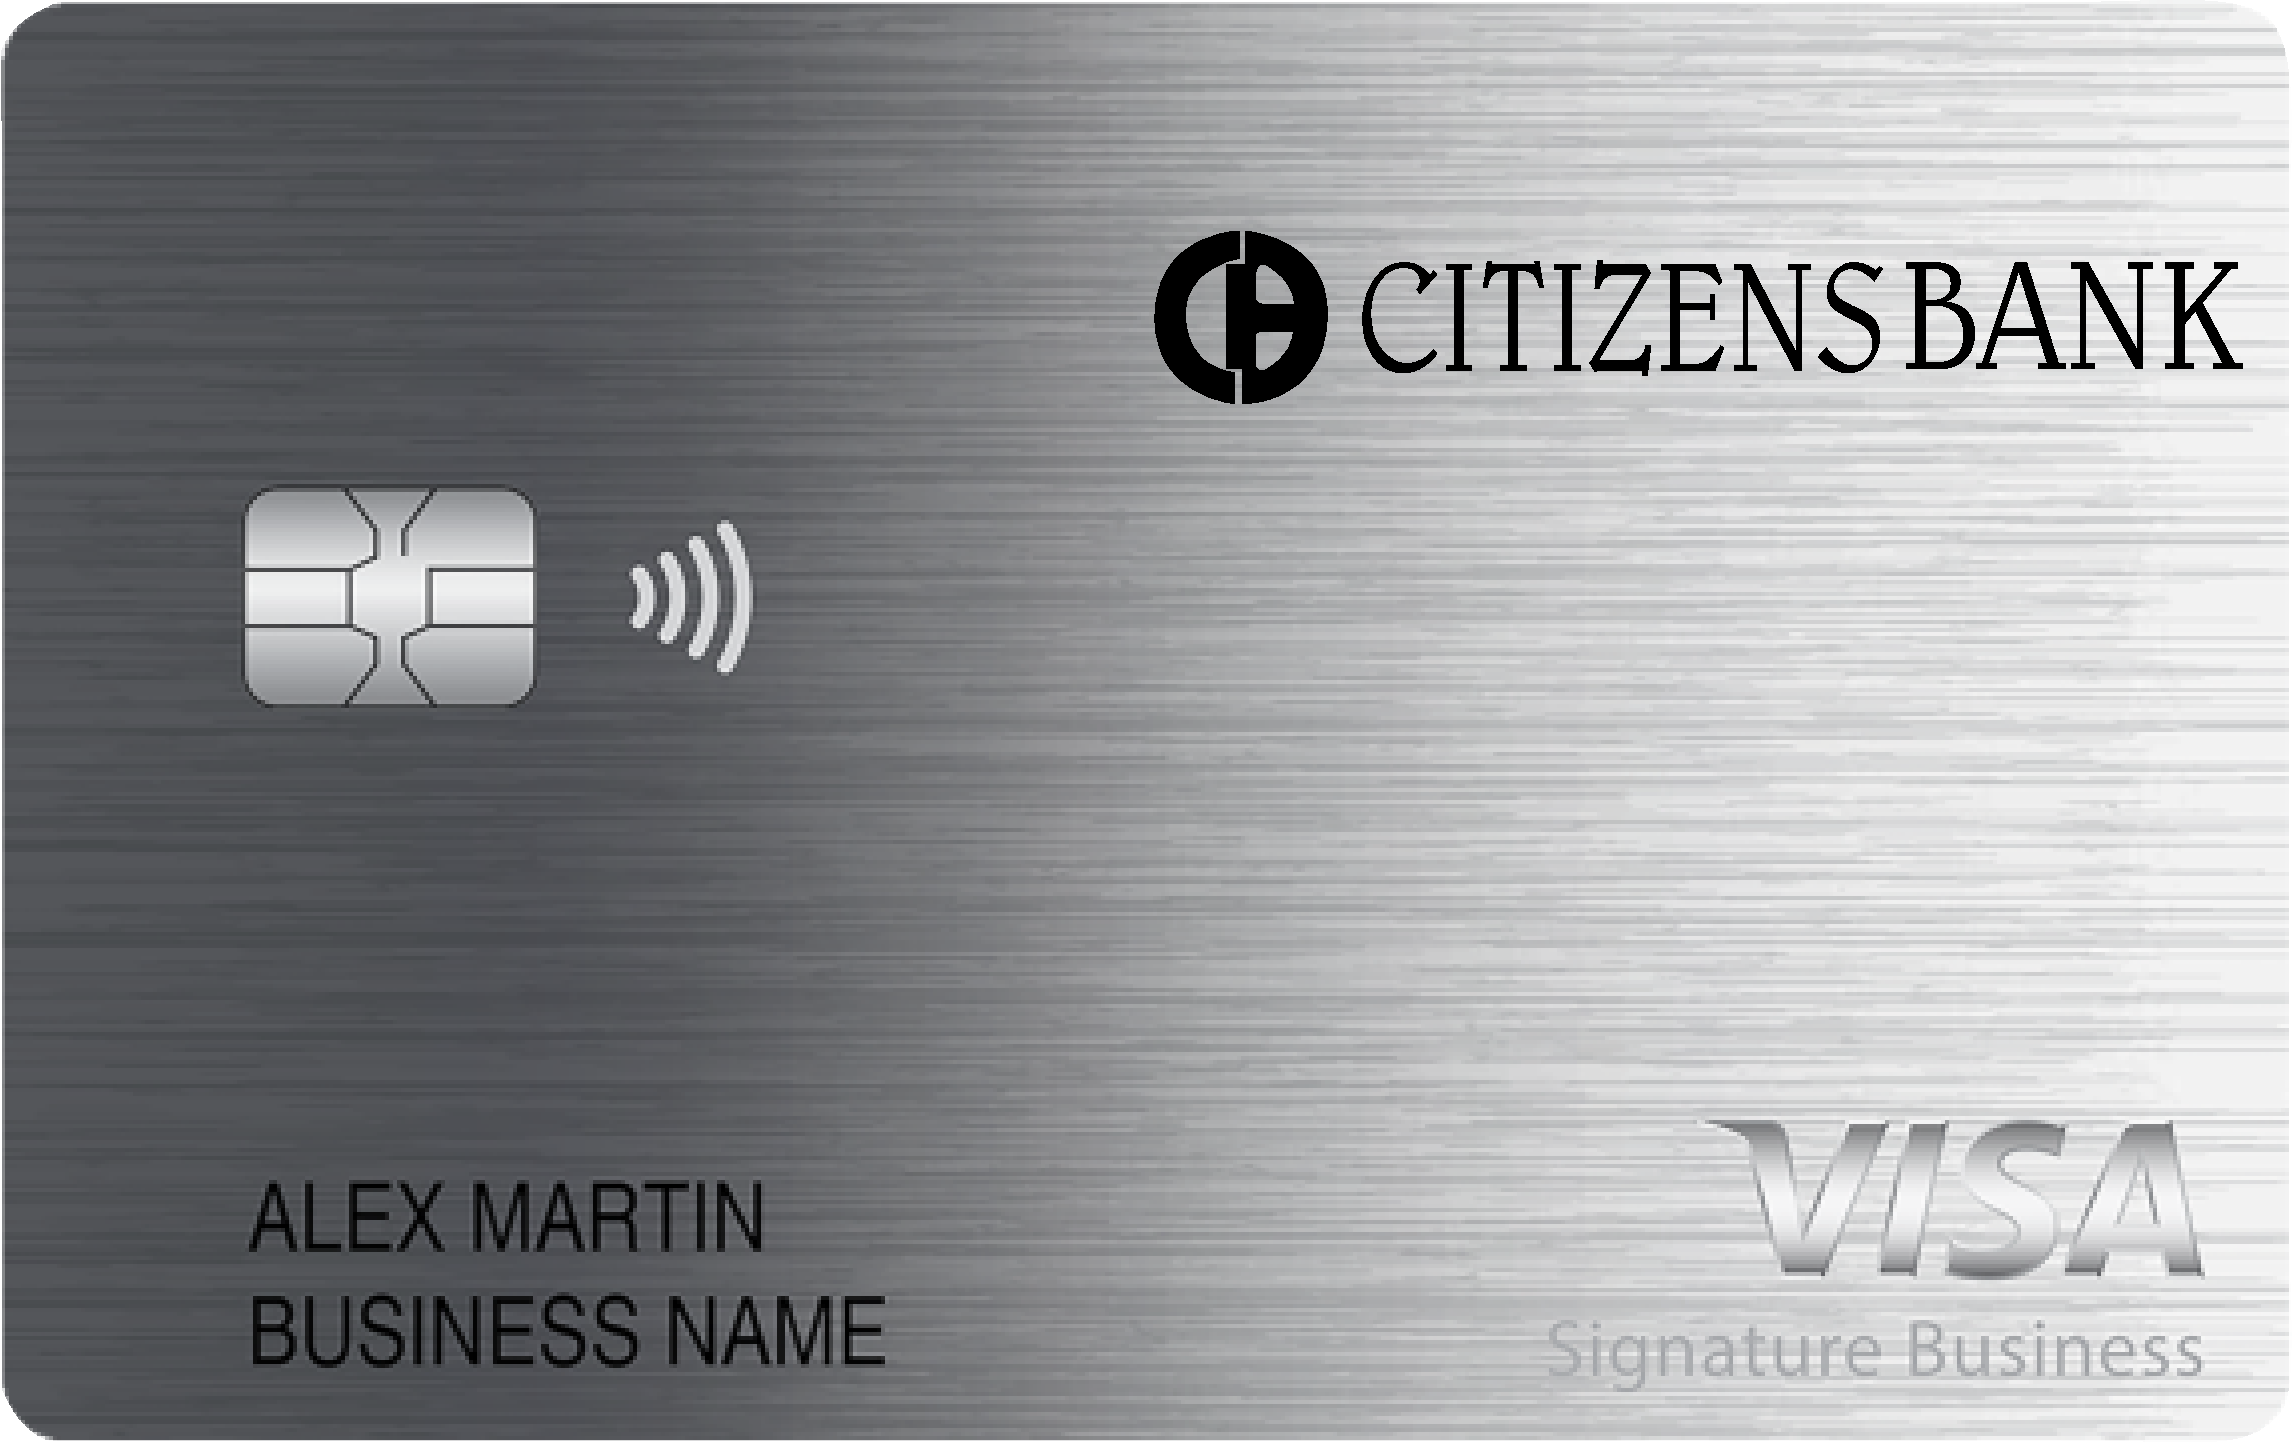 The Citizens Bank Smart Business Rewards Card